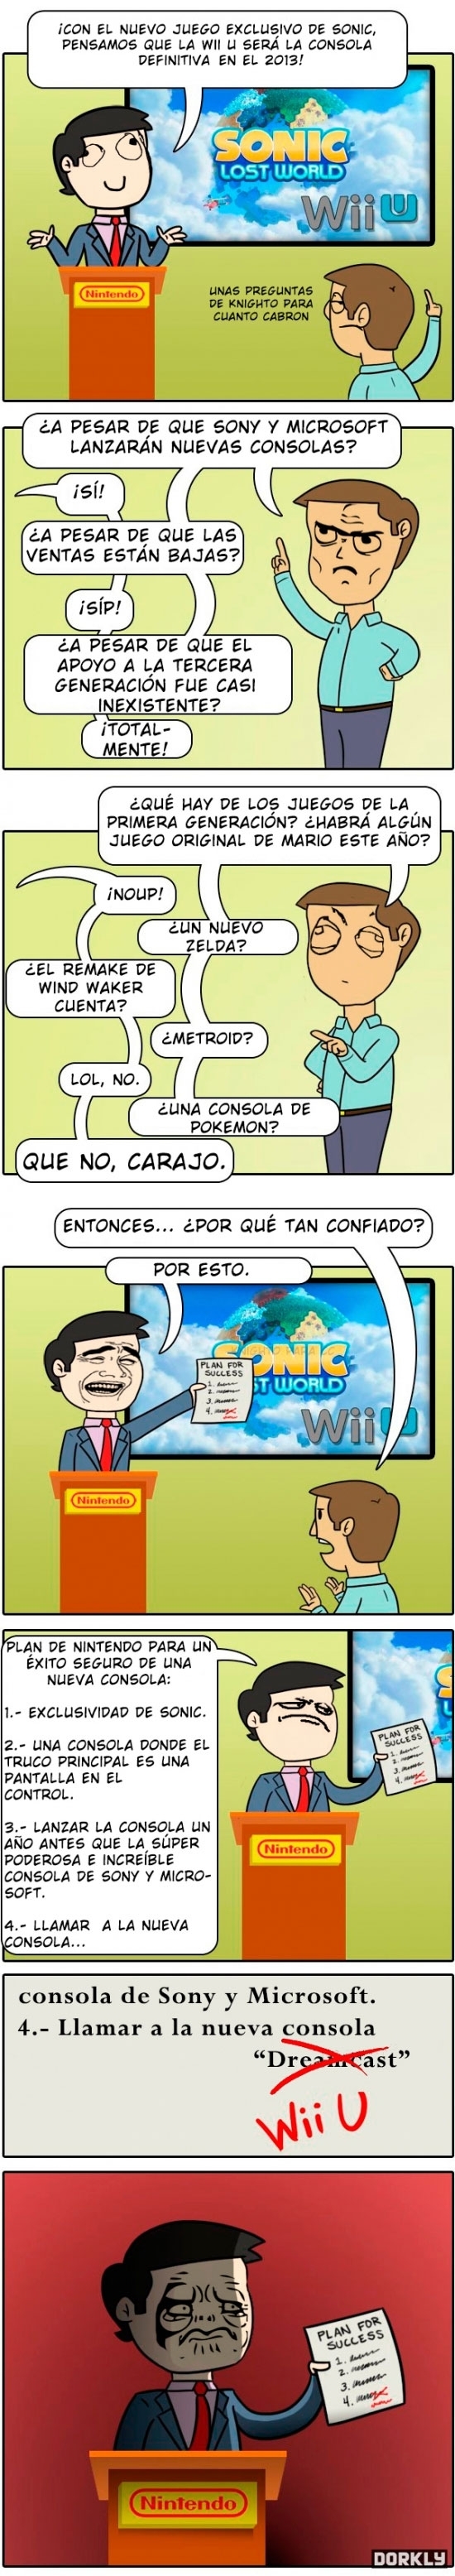 Mentira - La estrategia de Nintendo con Wii U